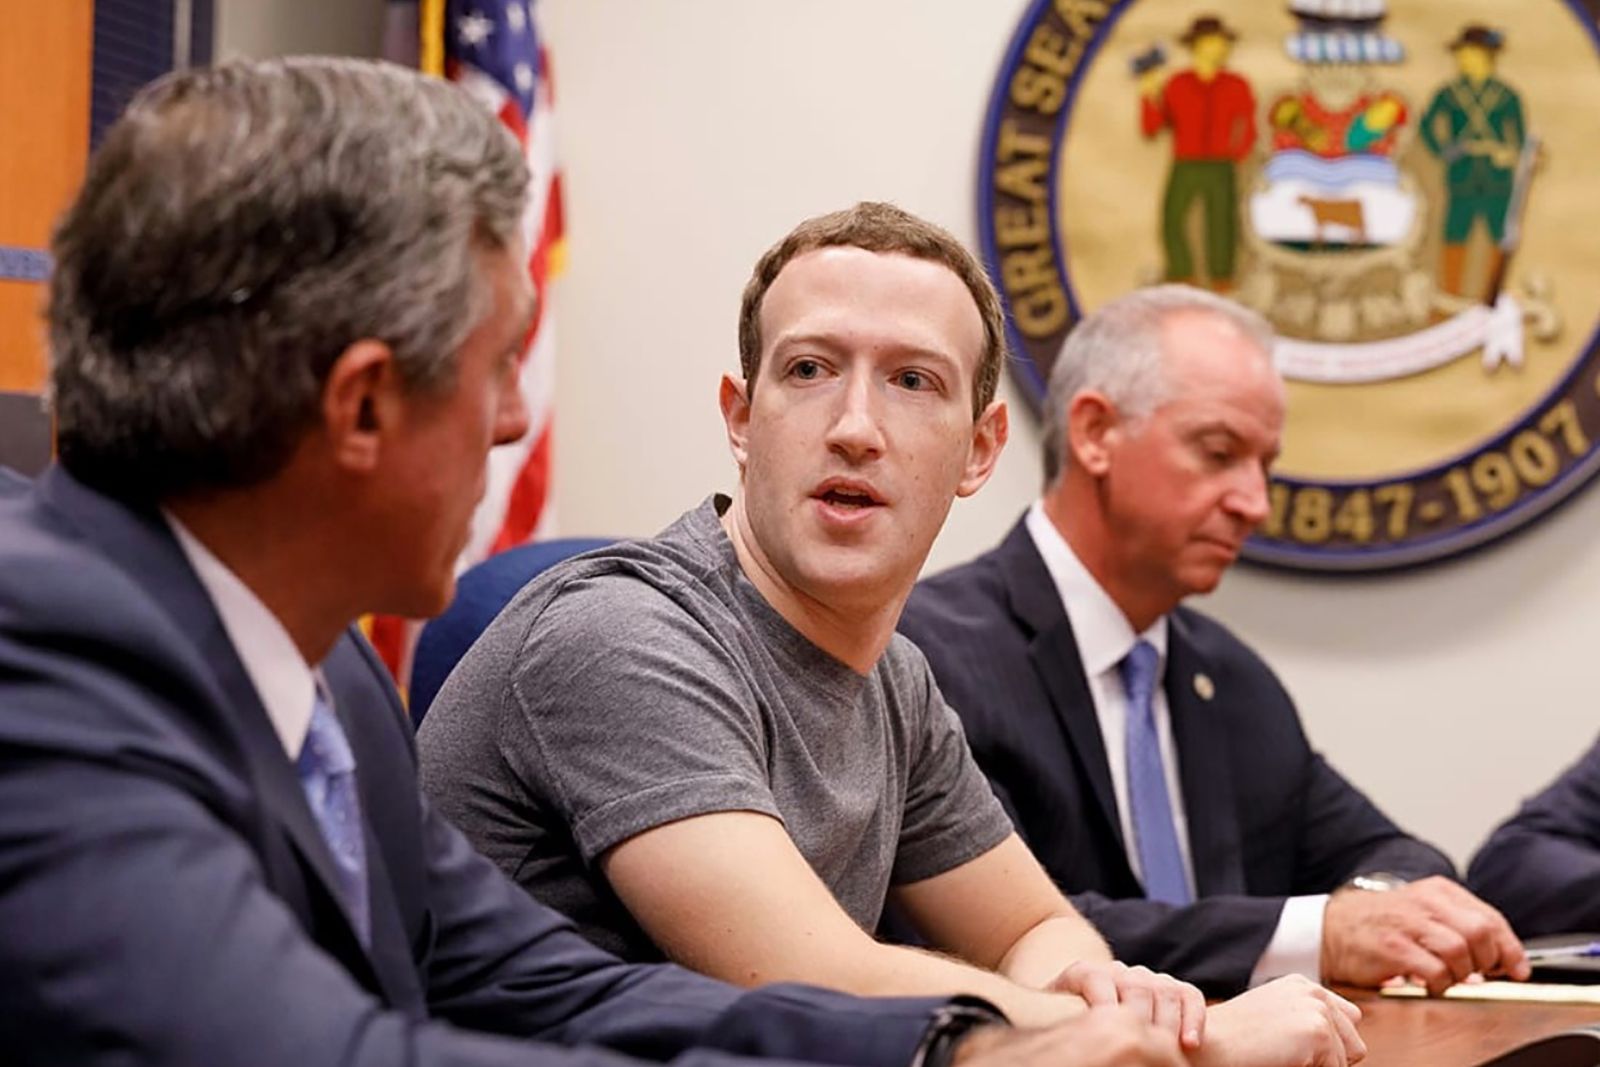 Cambridge Analytica scandal Zuckerberg breaks silence promises changes image 1